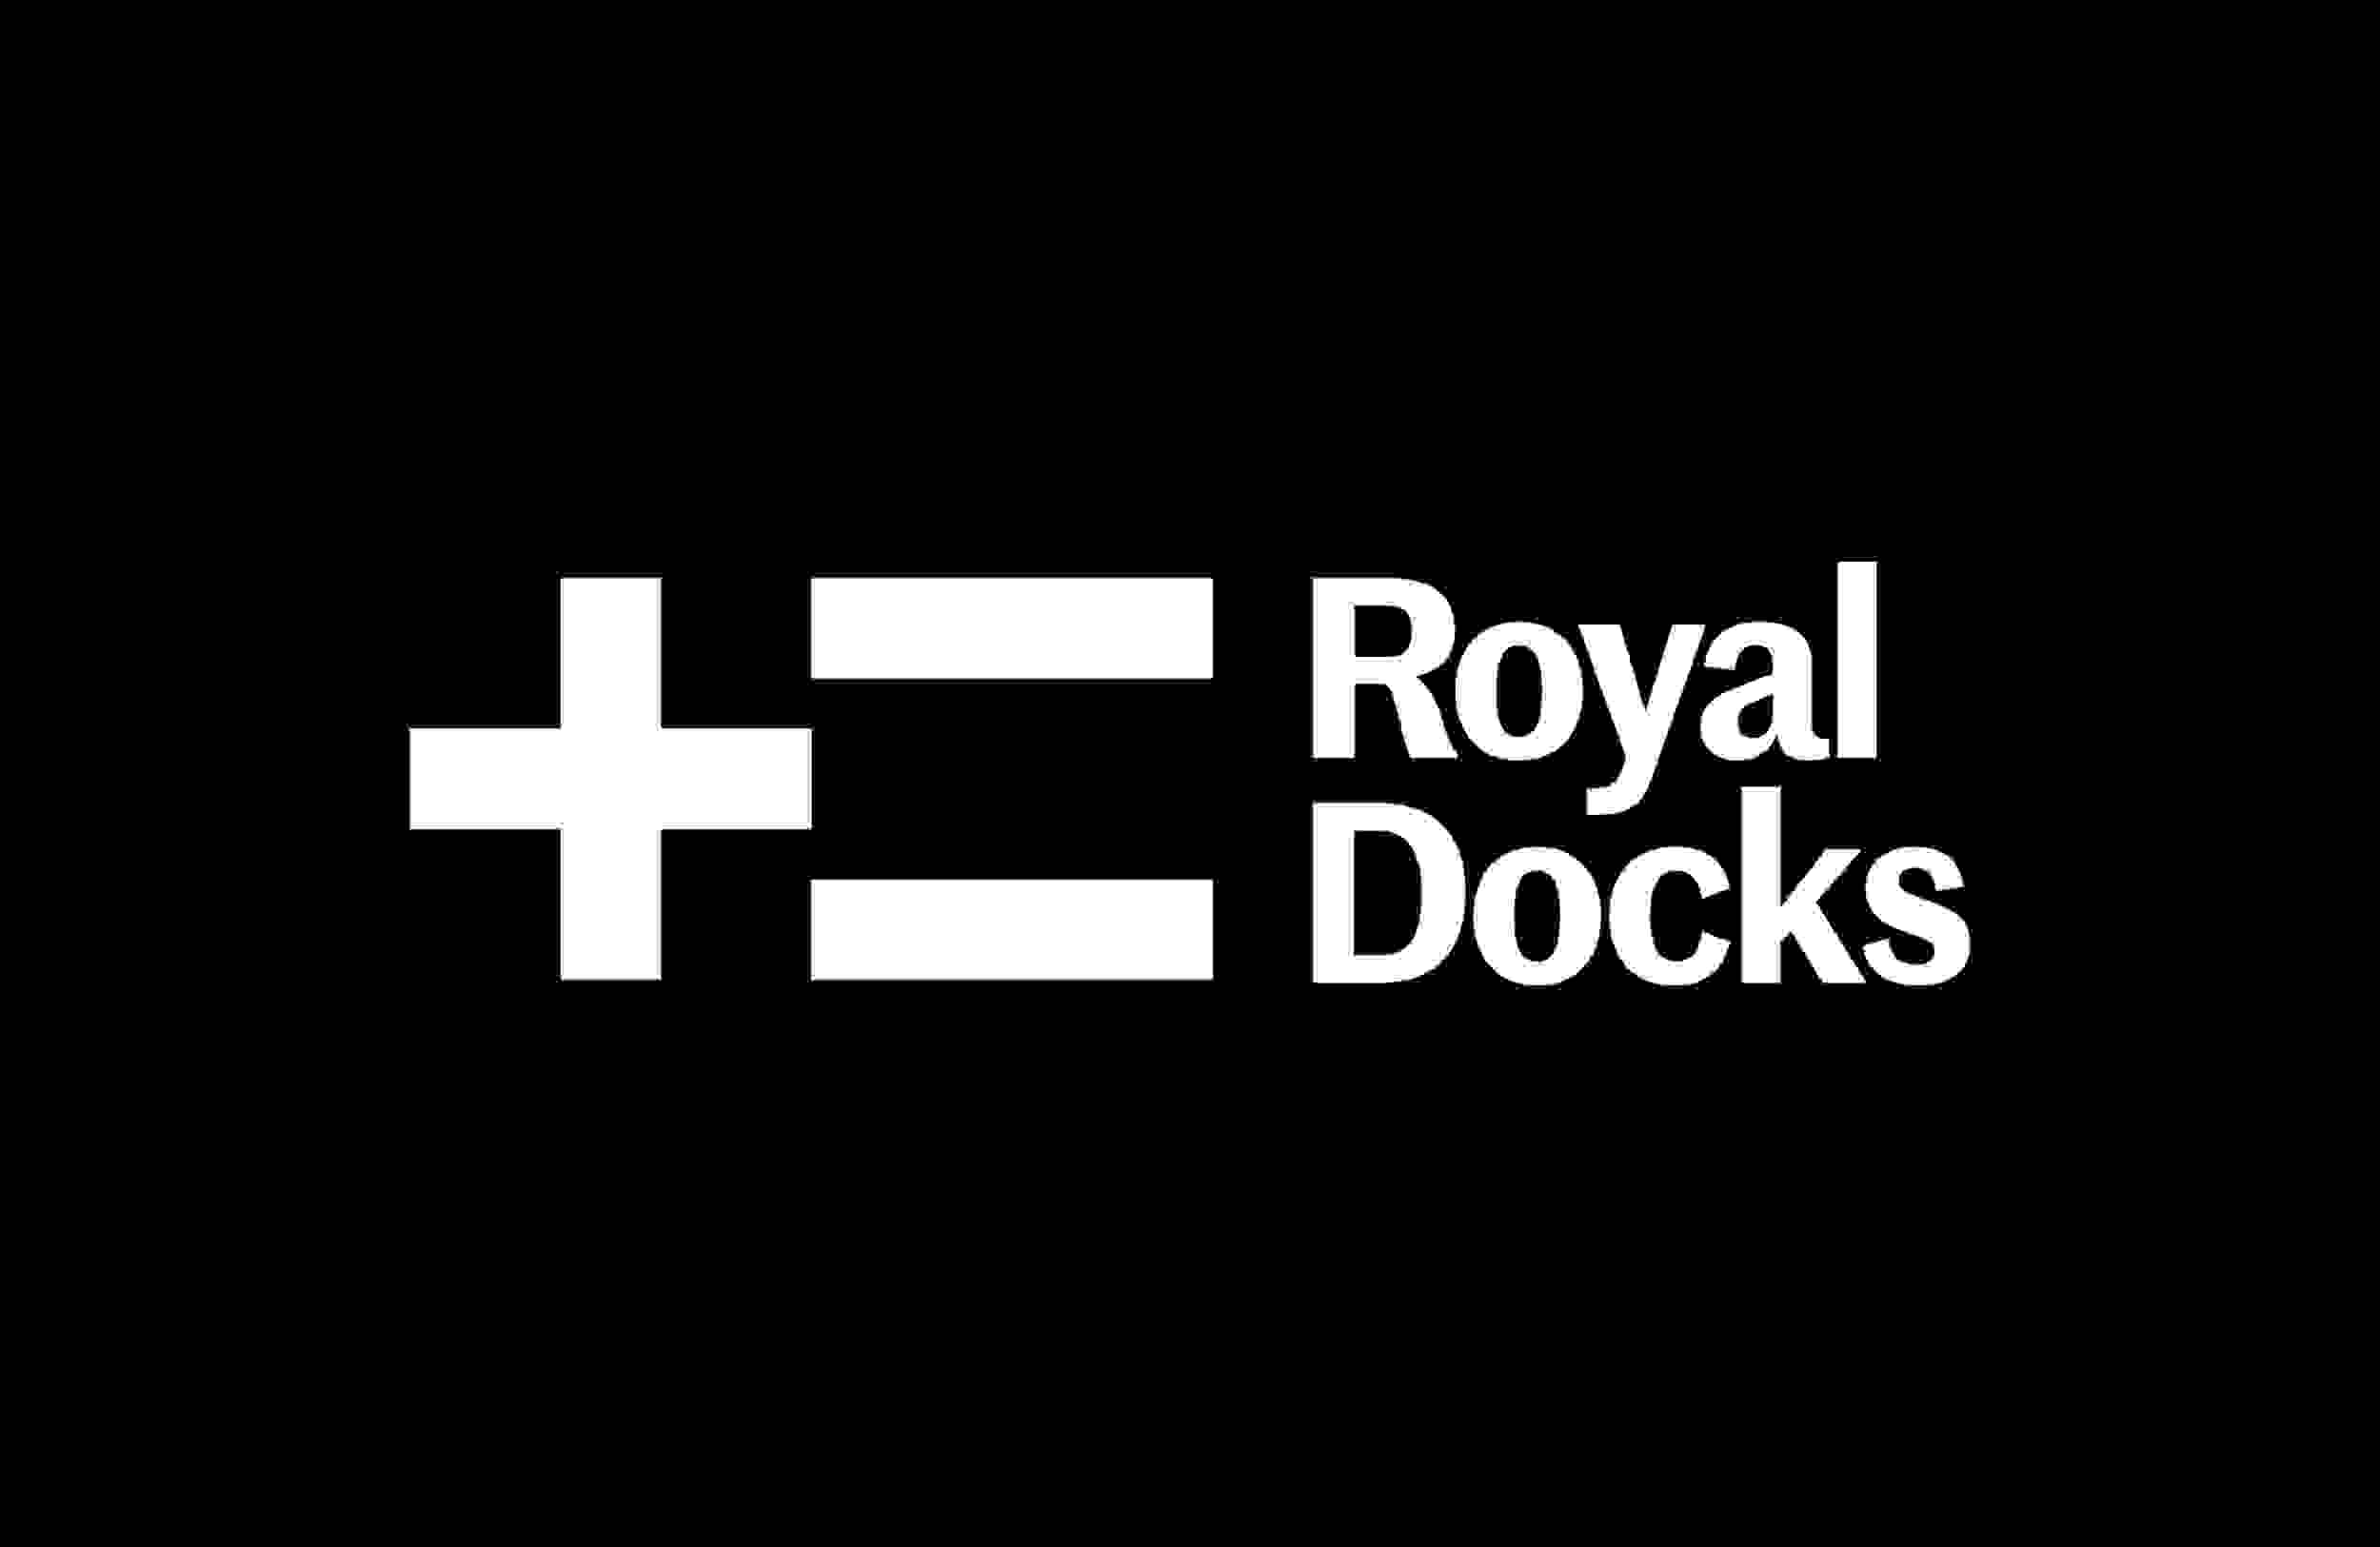 The Royal Docks logo